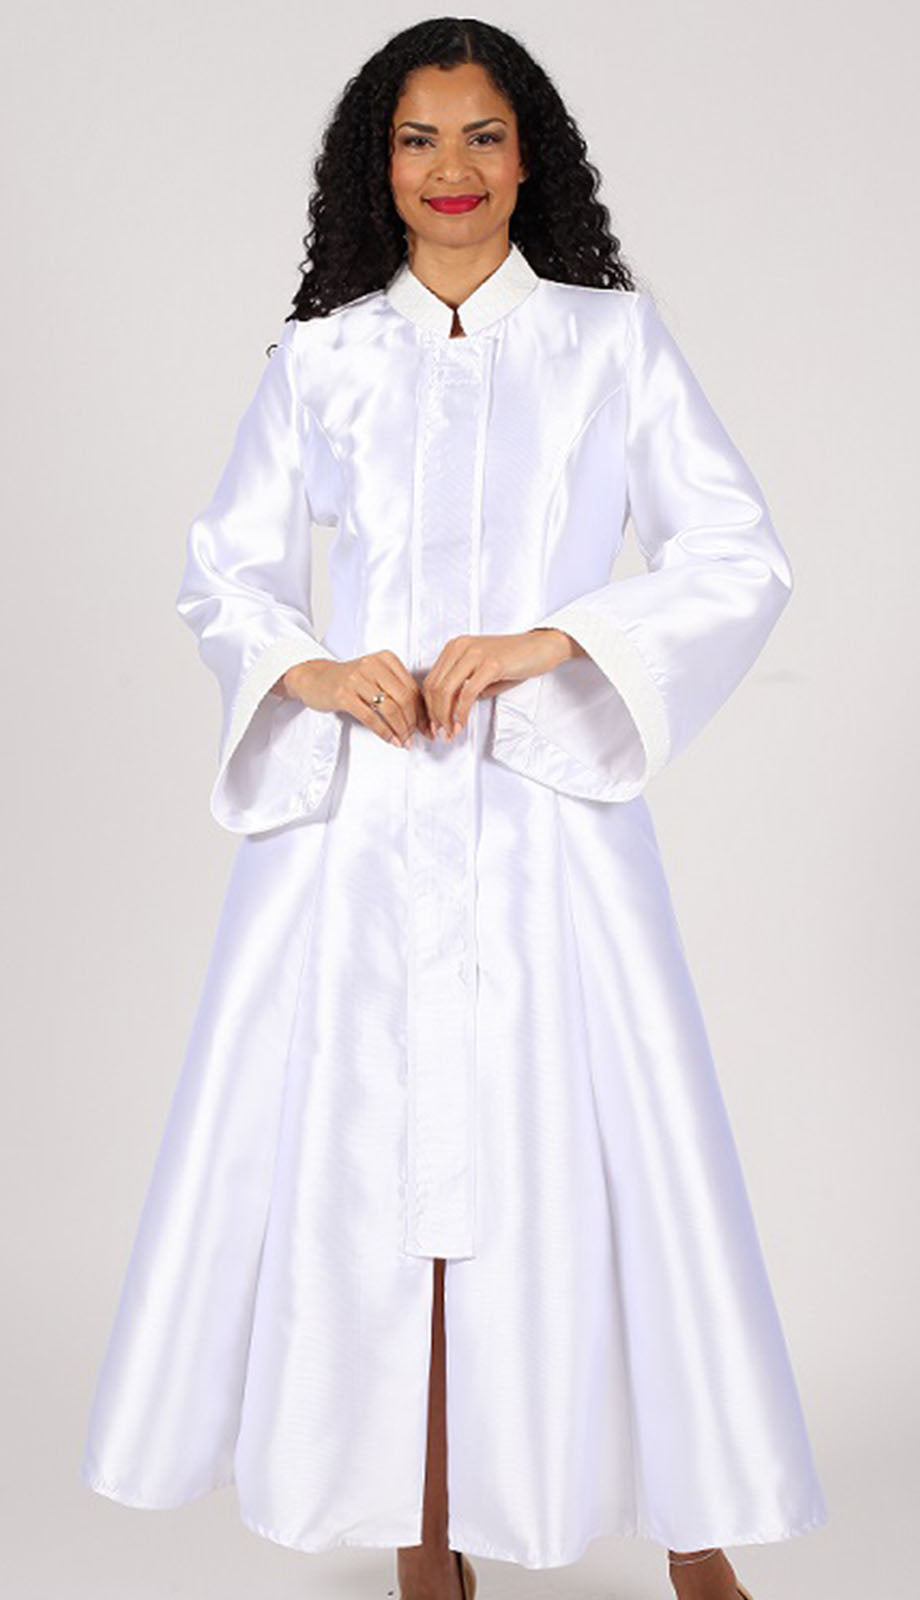 Diana Church Robe 8595-White - Church Suits For Less